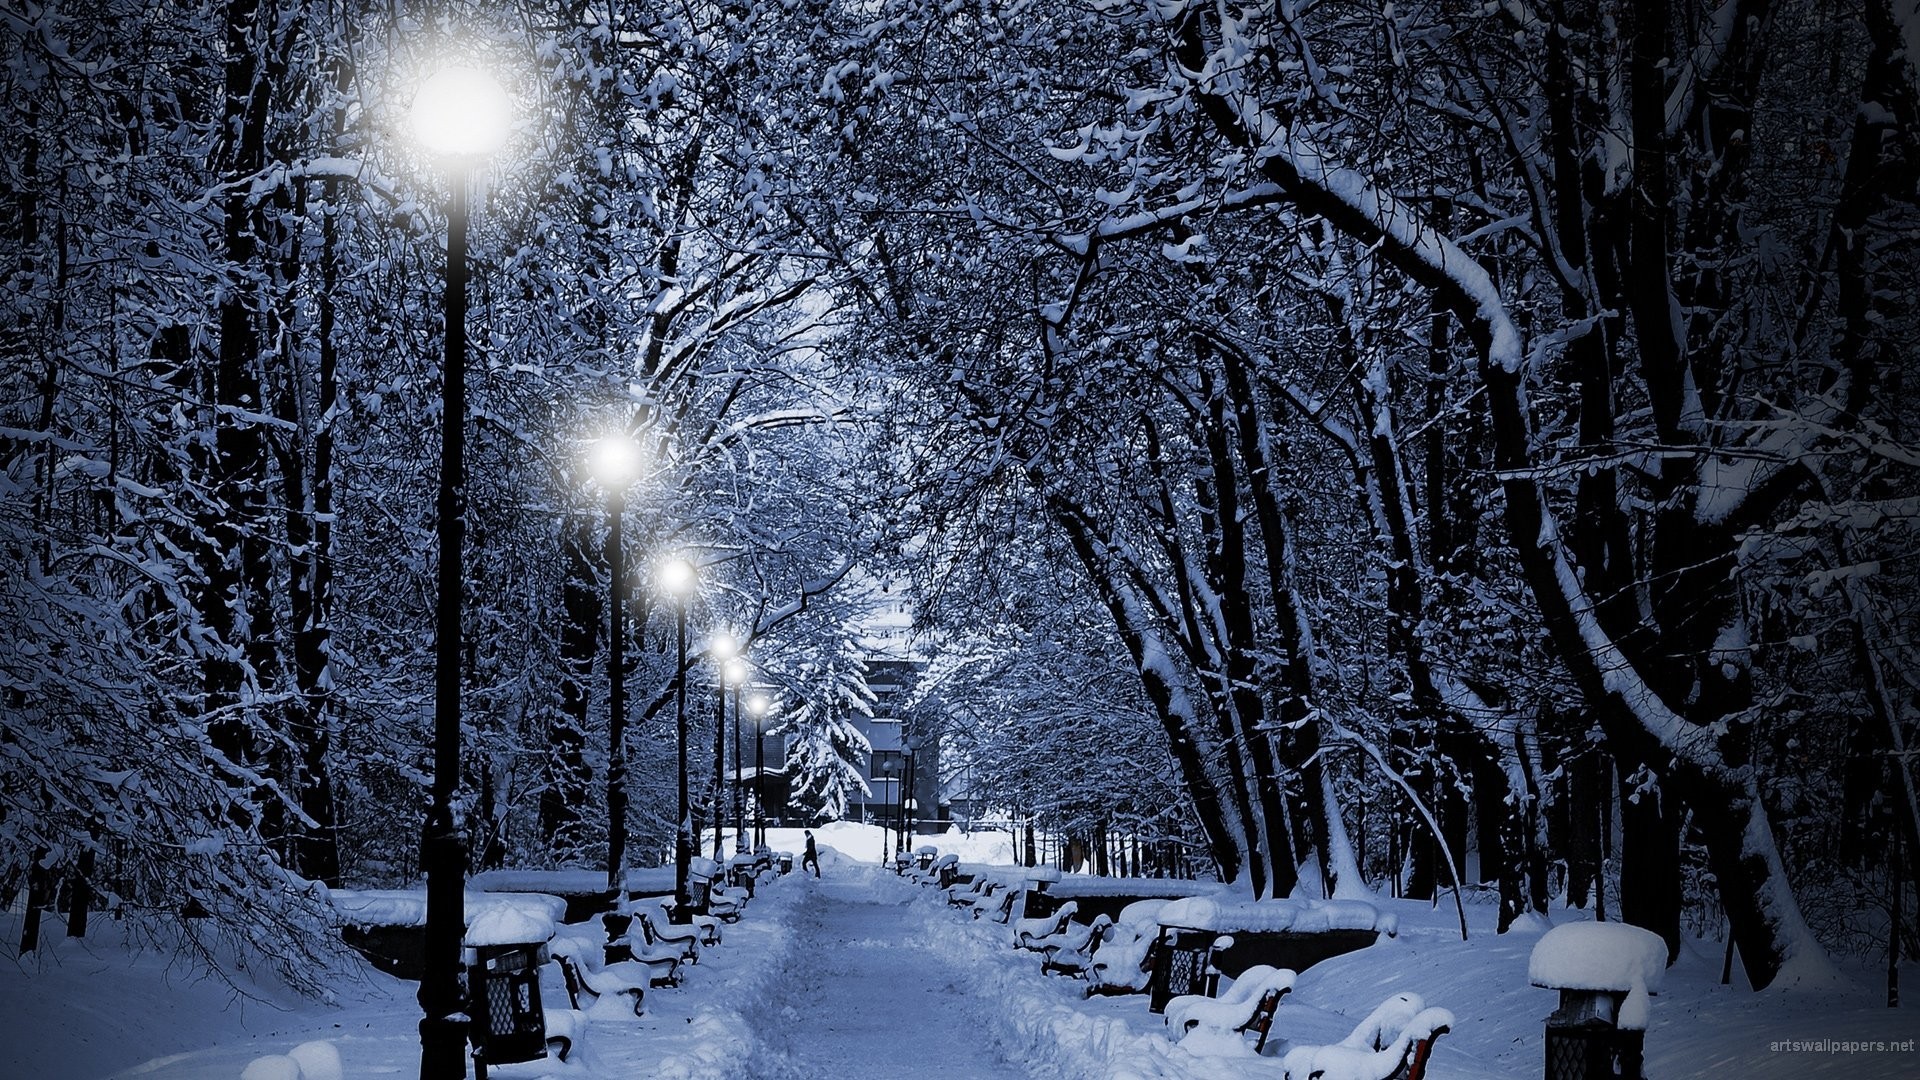 Winter Scene Desktop Background (56+ images)